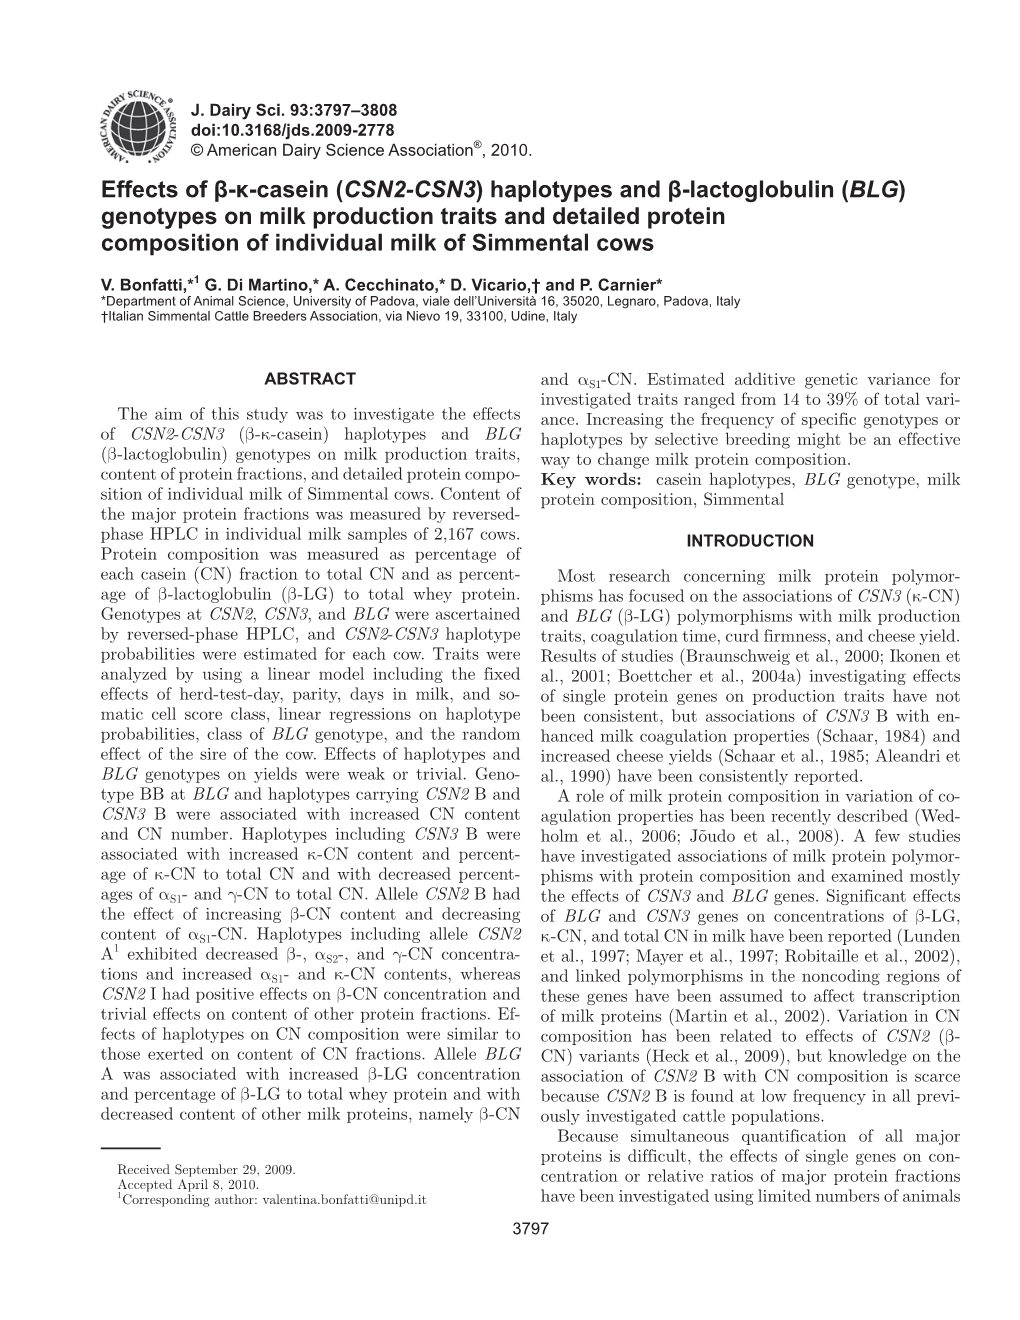 Effects of B-K-Casein (CSN2-CSN3) Haplotypes and B-Lactoglobulin